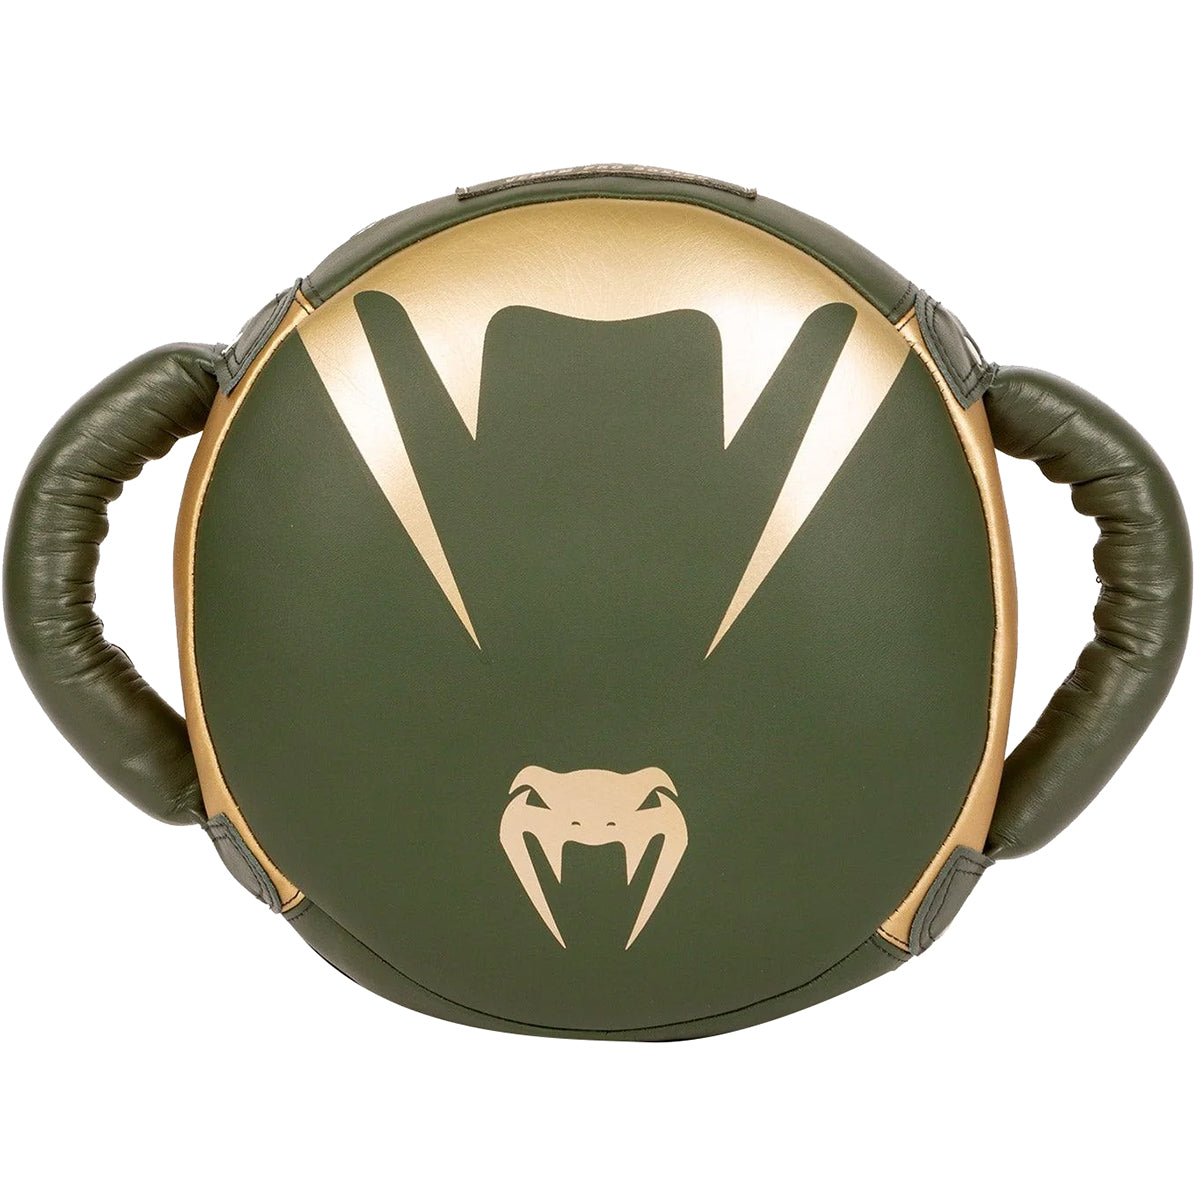 Venum Pro Boxing Mini Round Punch Shield - Khaki/Gold Venum